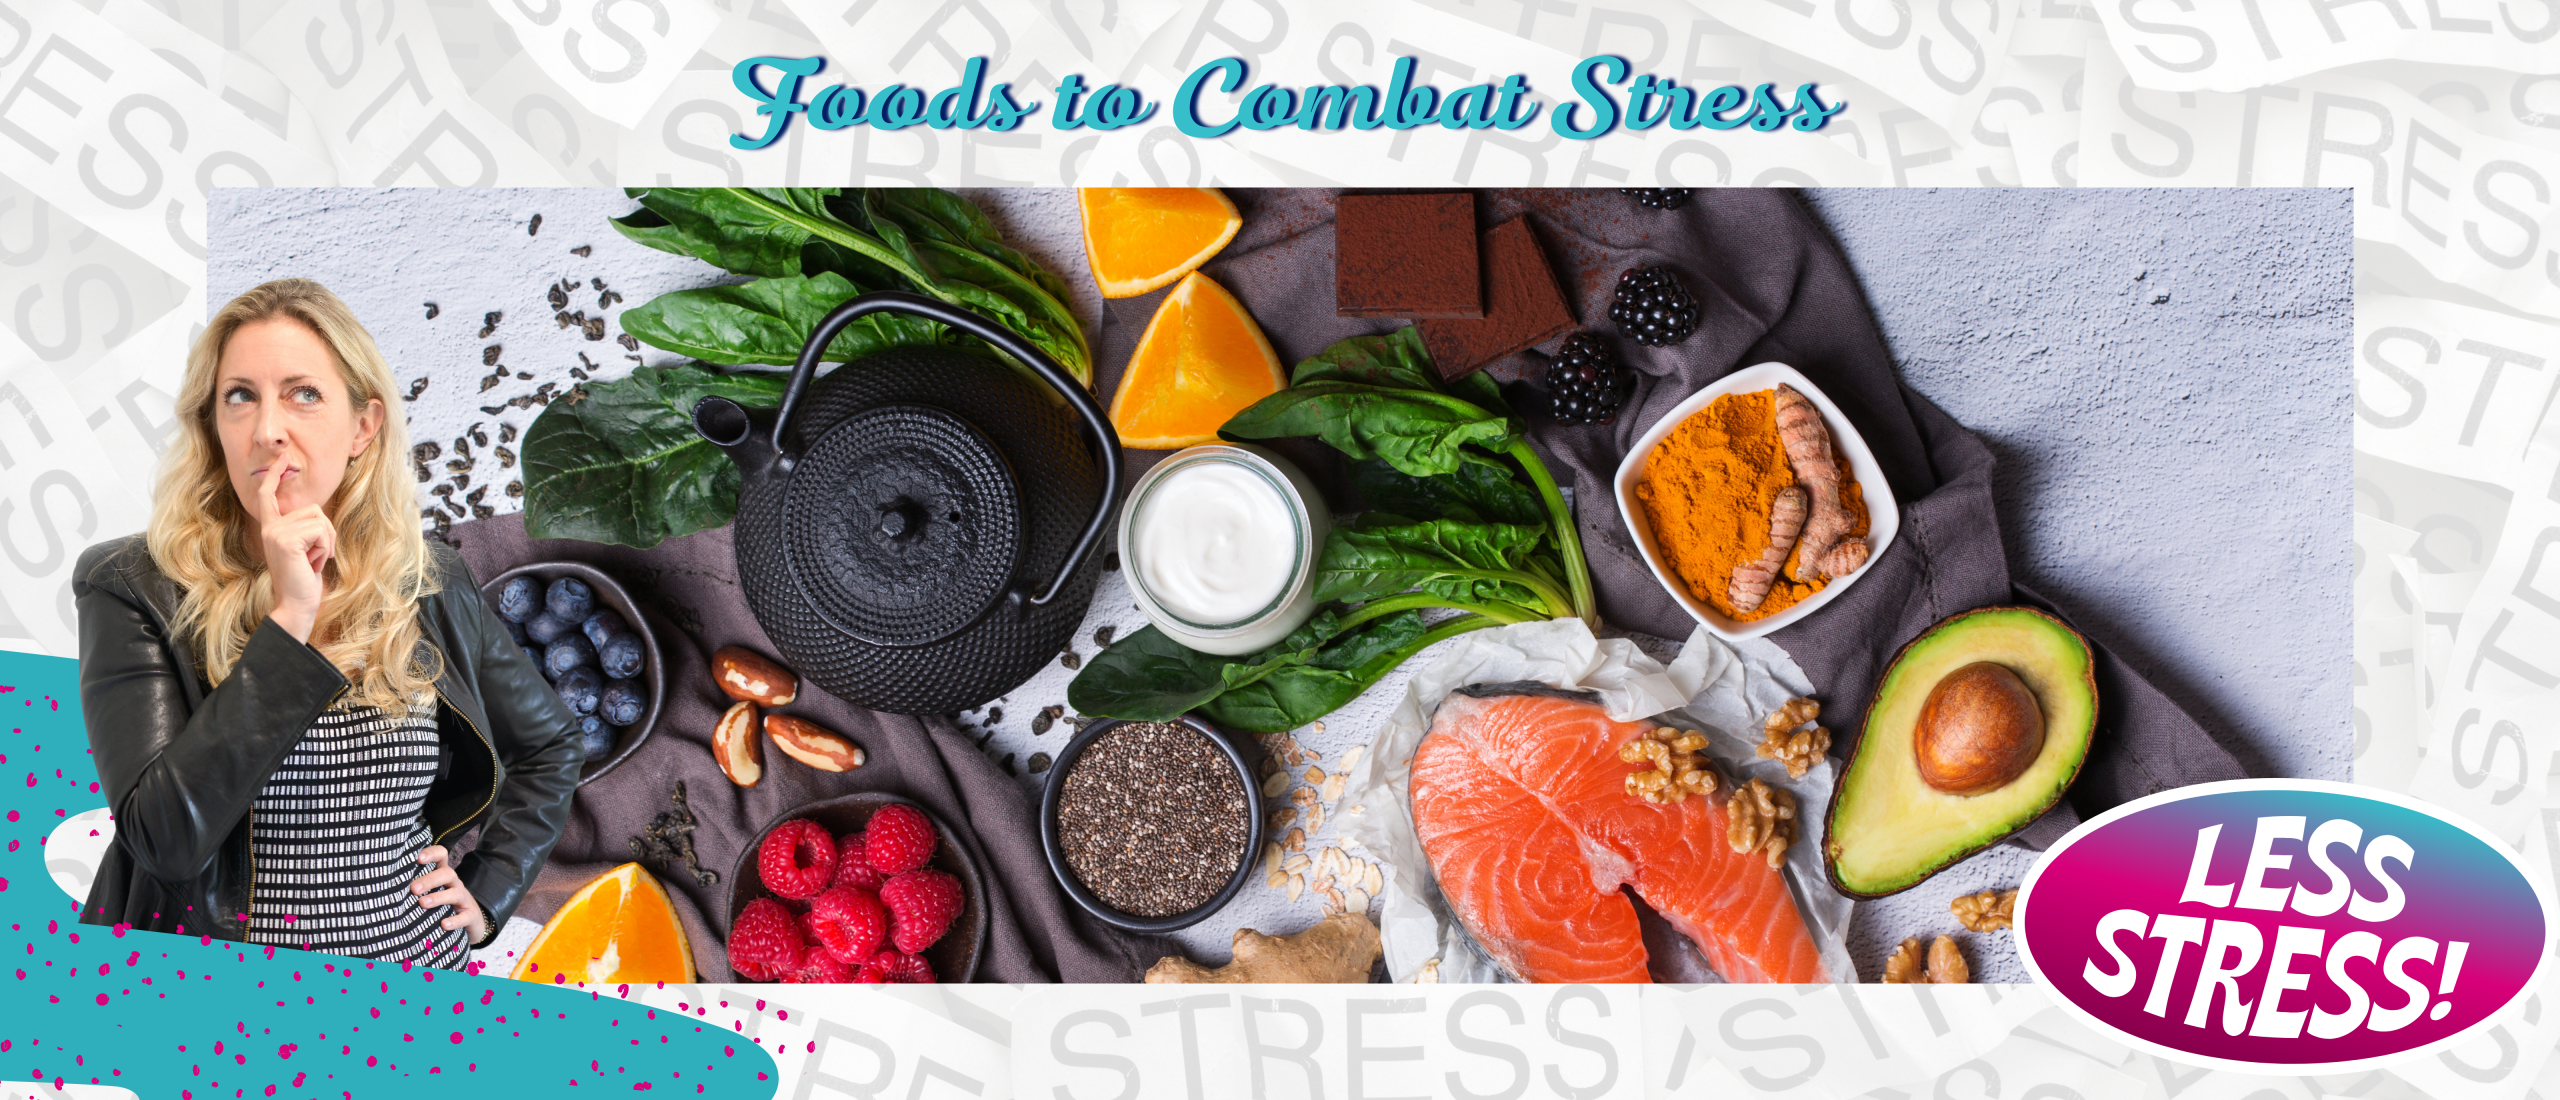 Foods to combat stress